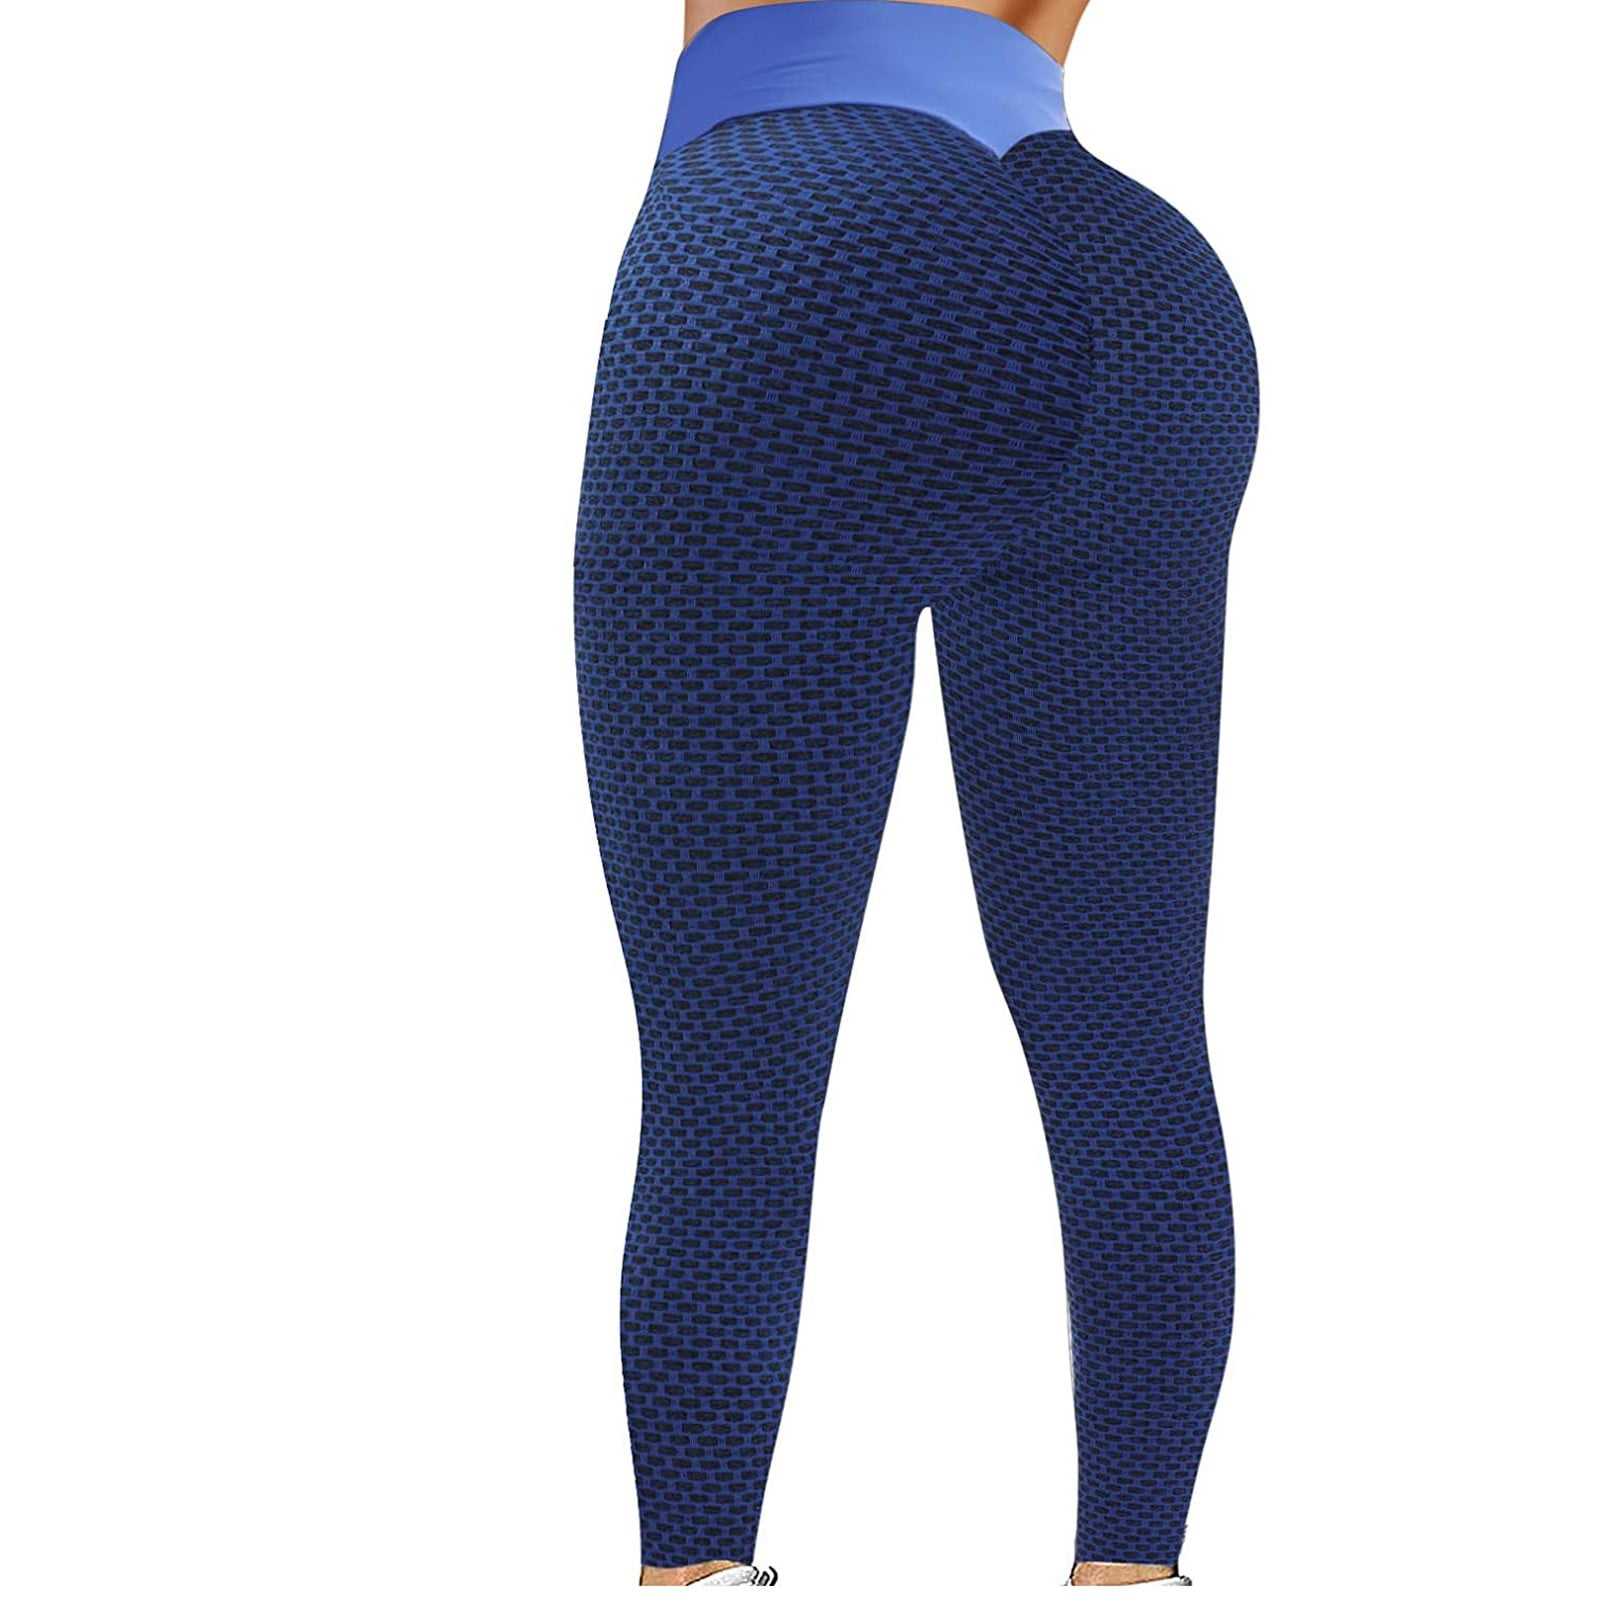 Details about   Women Ladies Anti-Cellulite High Waist Yoga Pants Gym Leggings Elastic Trousers 